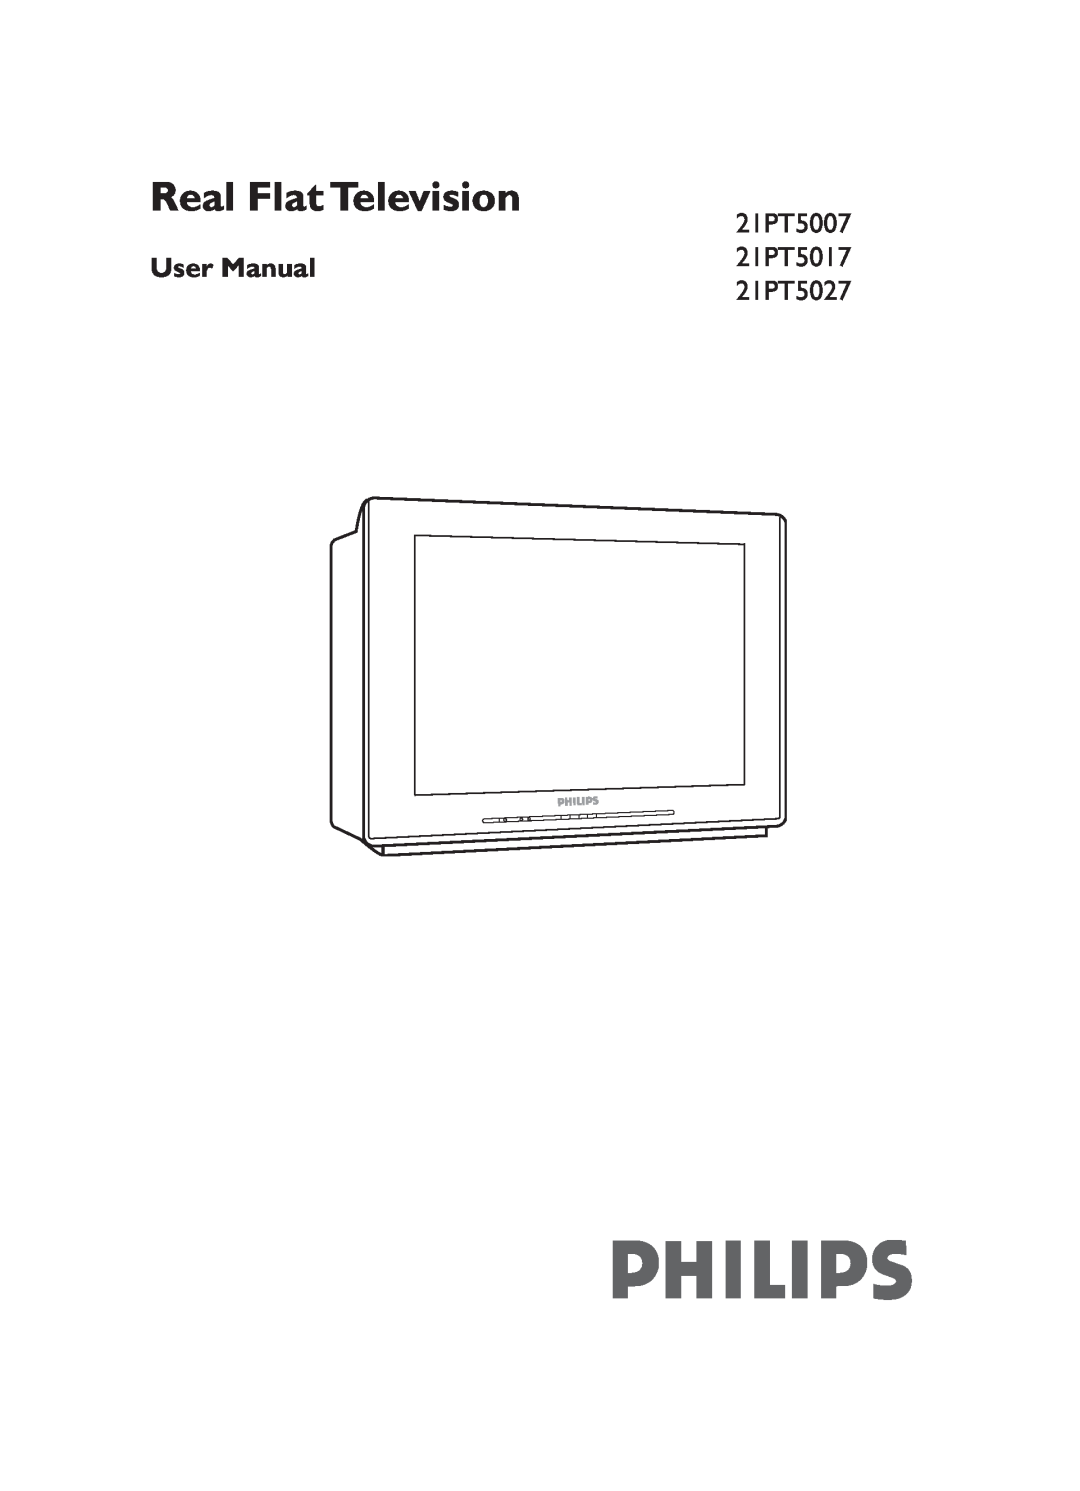 Philips 21PT5007 user manual Real Flat Television, User Manual, 21PT5017, 21PT5027 